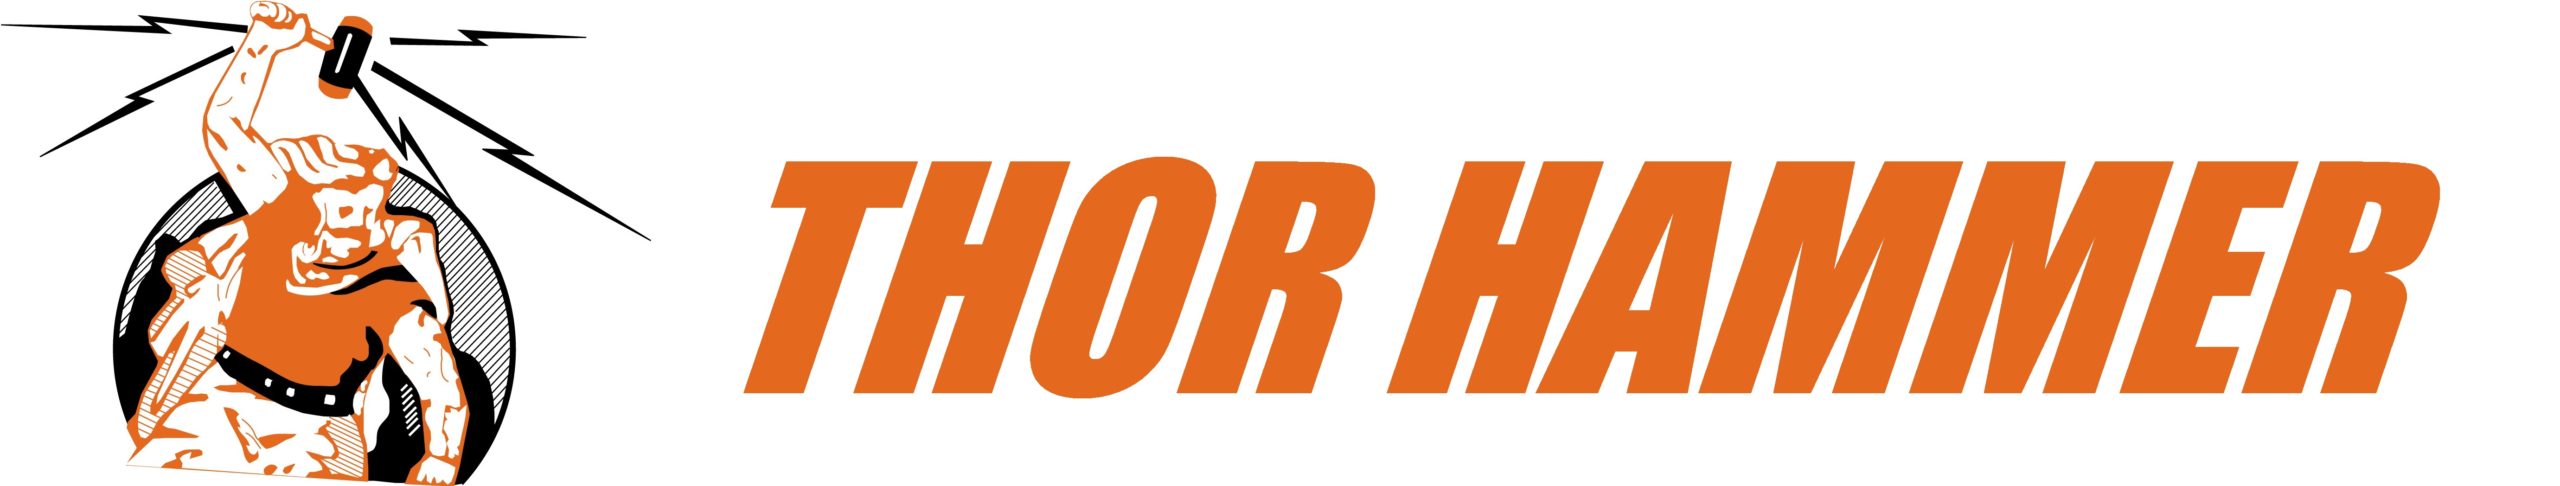 Thor Hammer logo